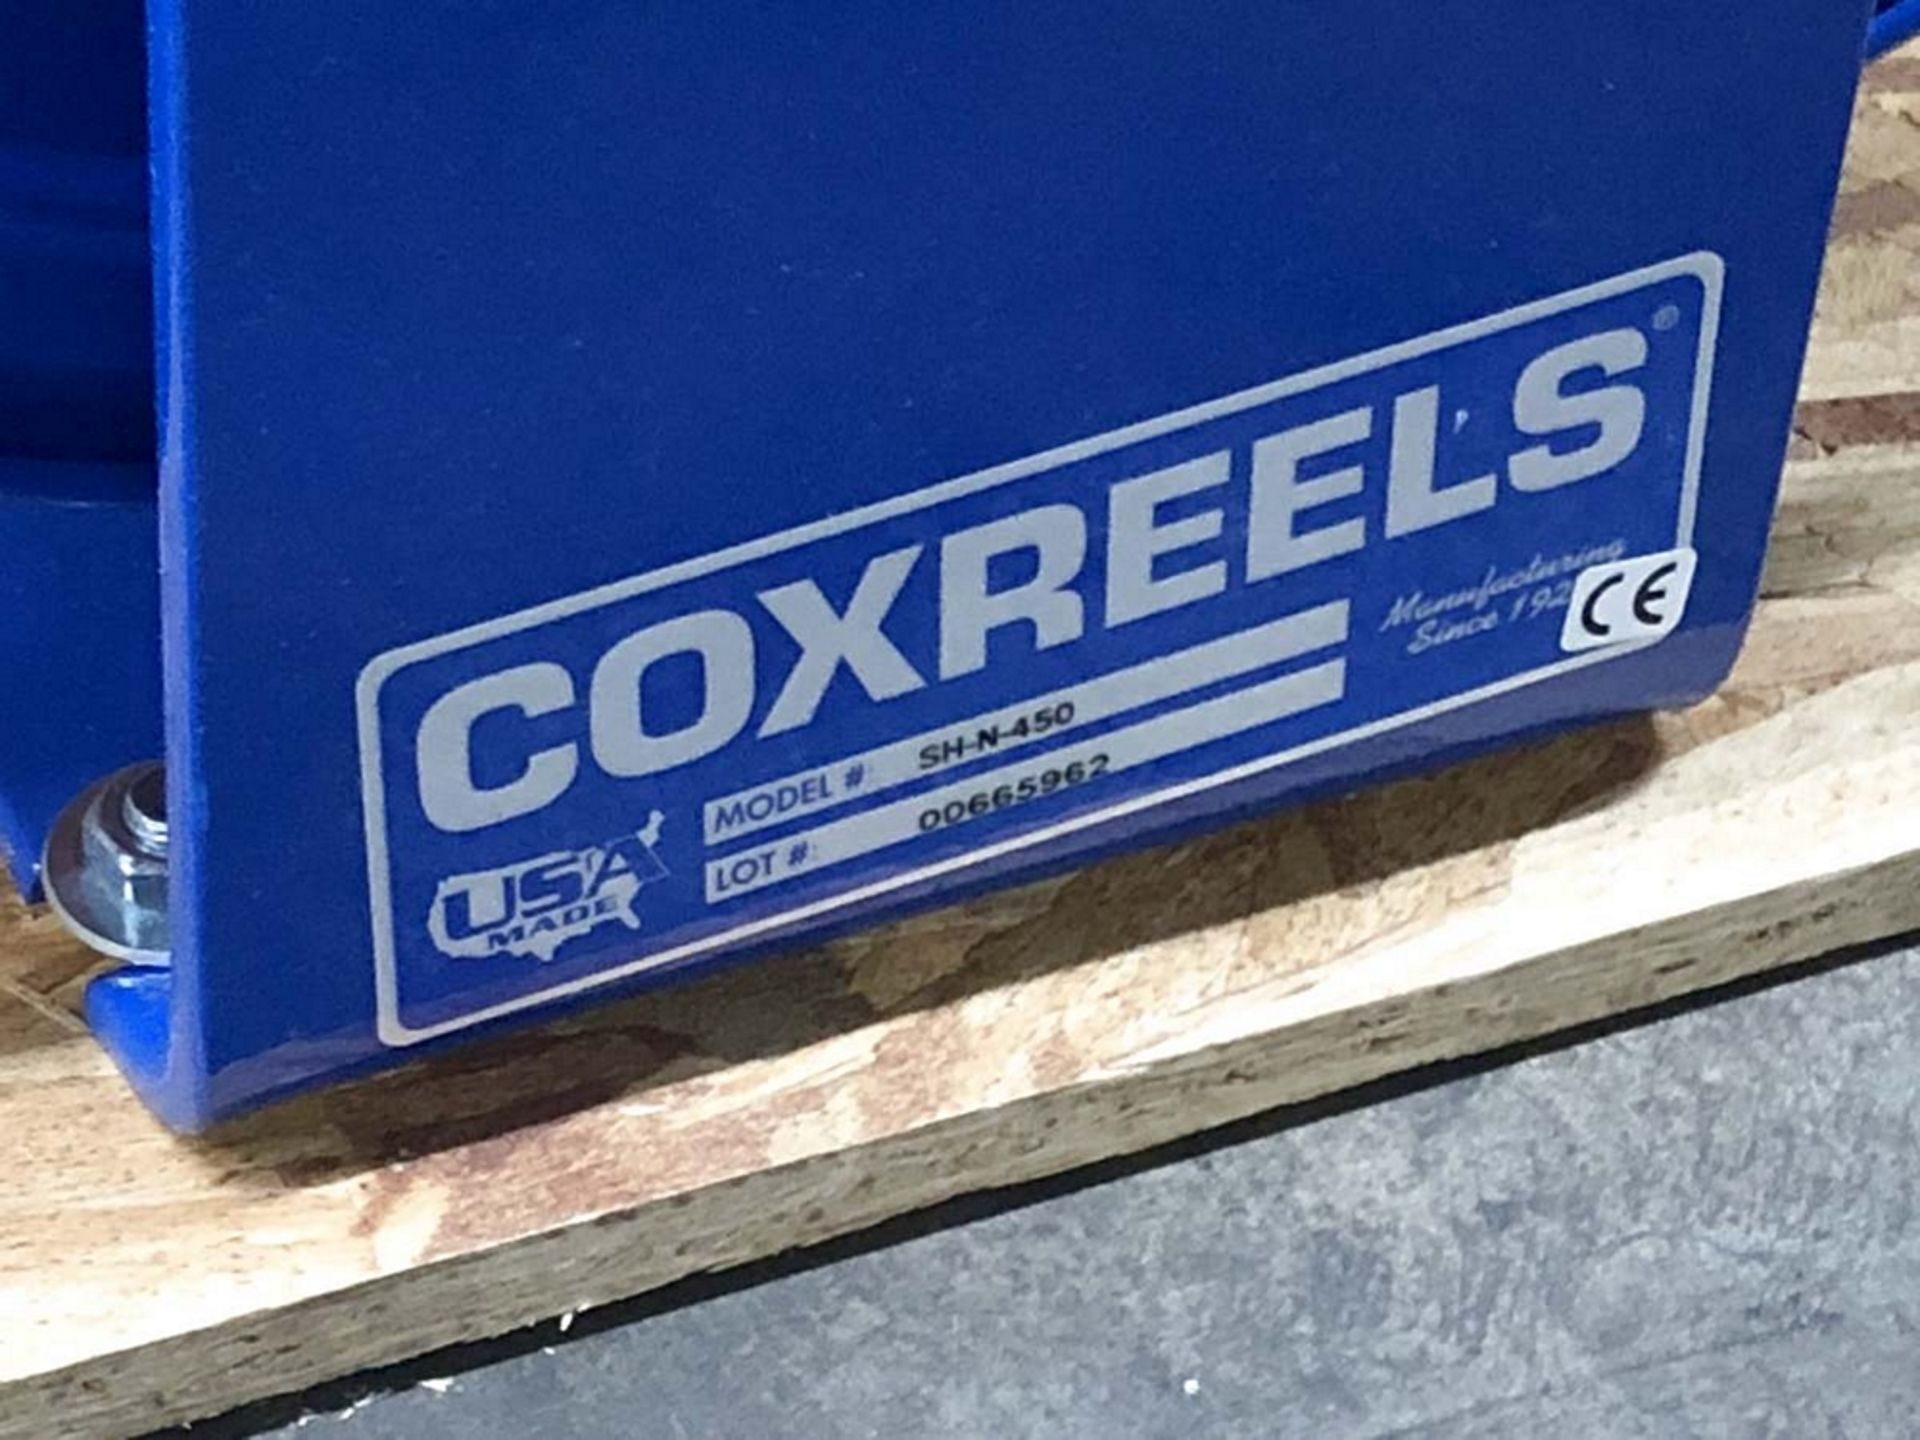 Coxreels Model SH-N-450 1/2" x 50' Hose Reels - Image 3 of 4